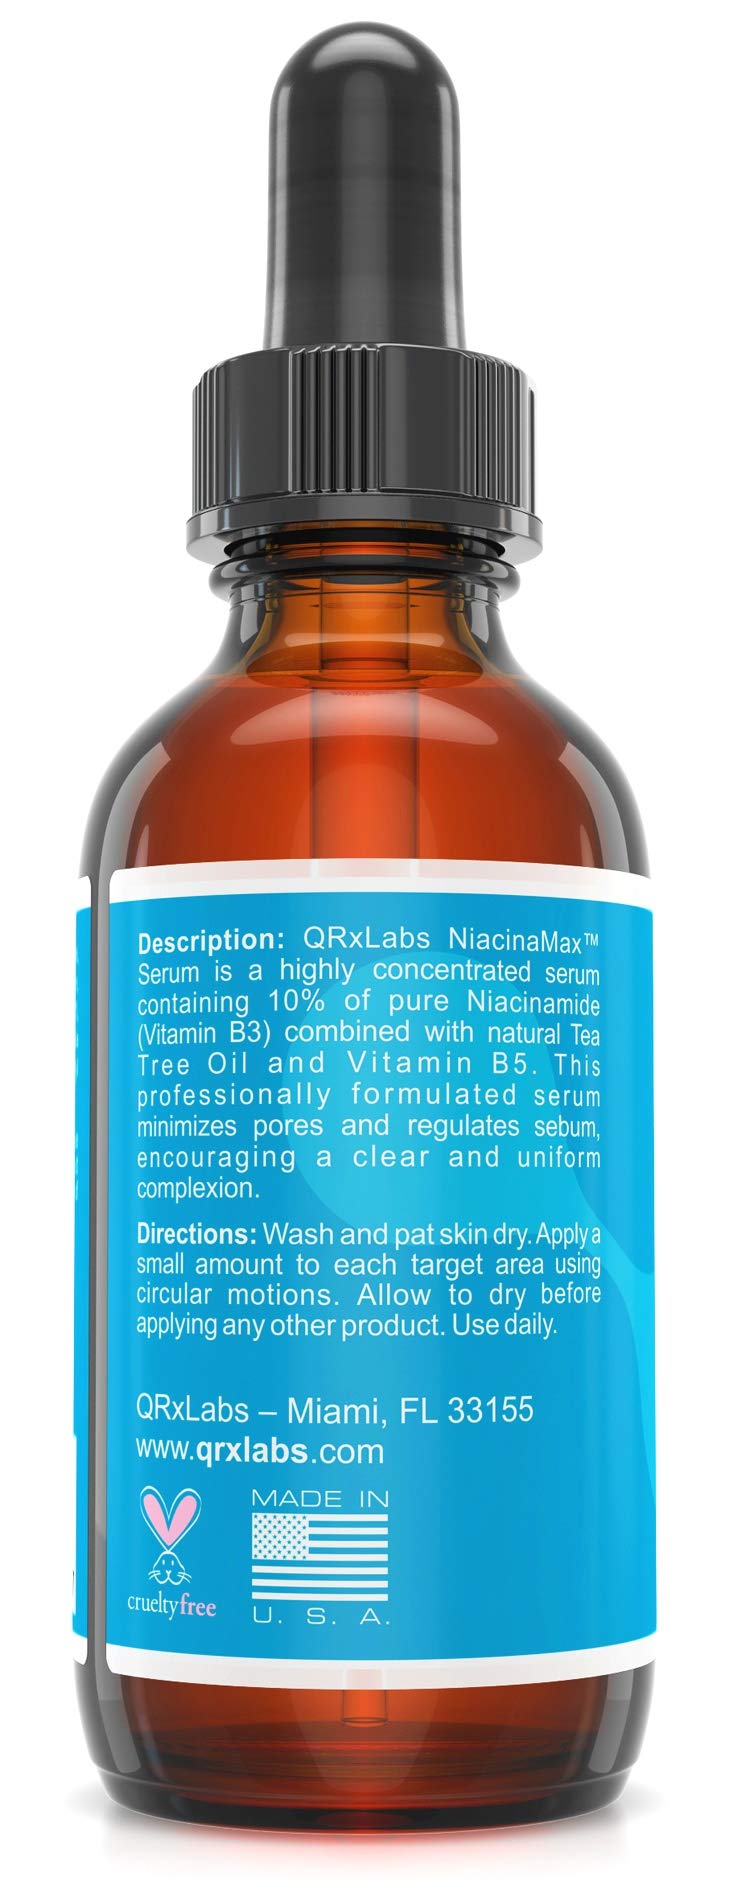 [Australia] - Niacinamax Serum With 10% Niacinamide (Vitamin B3), Tea Tree Oil, Calendula Extract, Allantoin And Vit. B5 & E - Enhanced Dermal Penetration - Shrinks Pores & Reduces Blemishes On Skin - 60 ml 